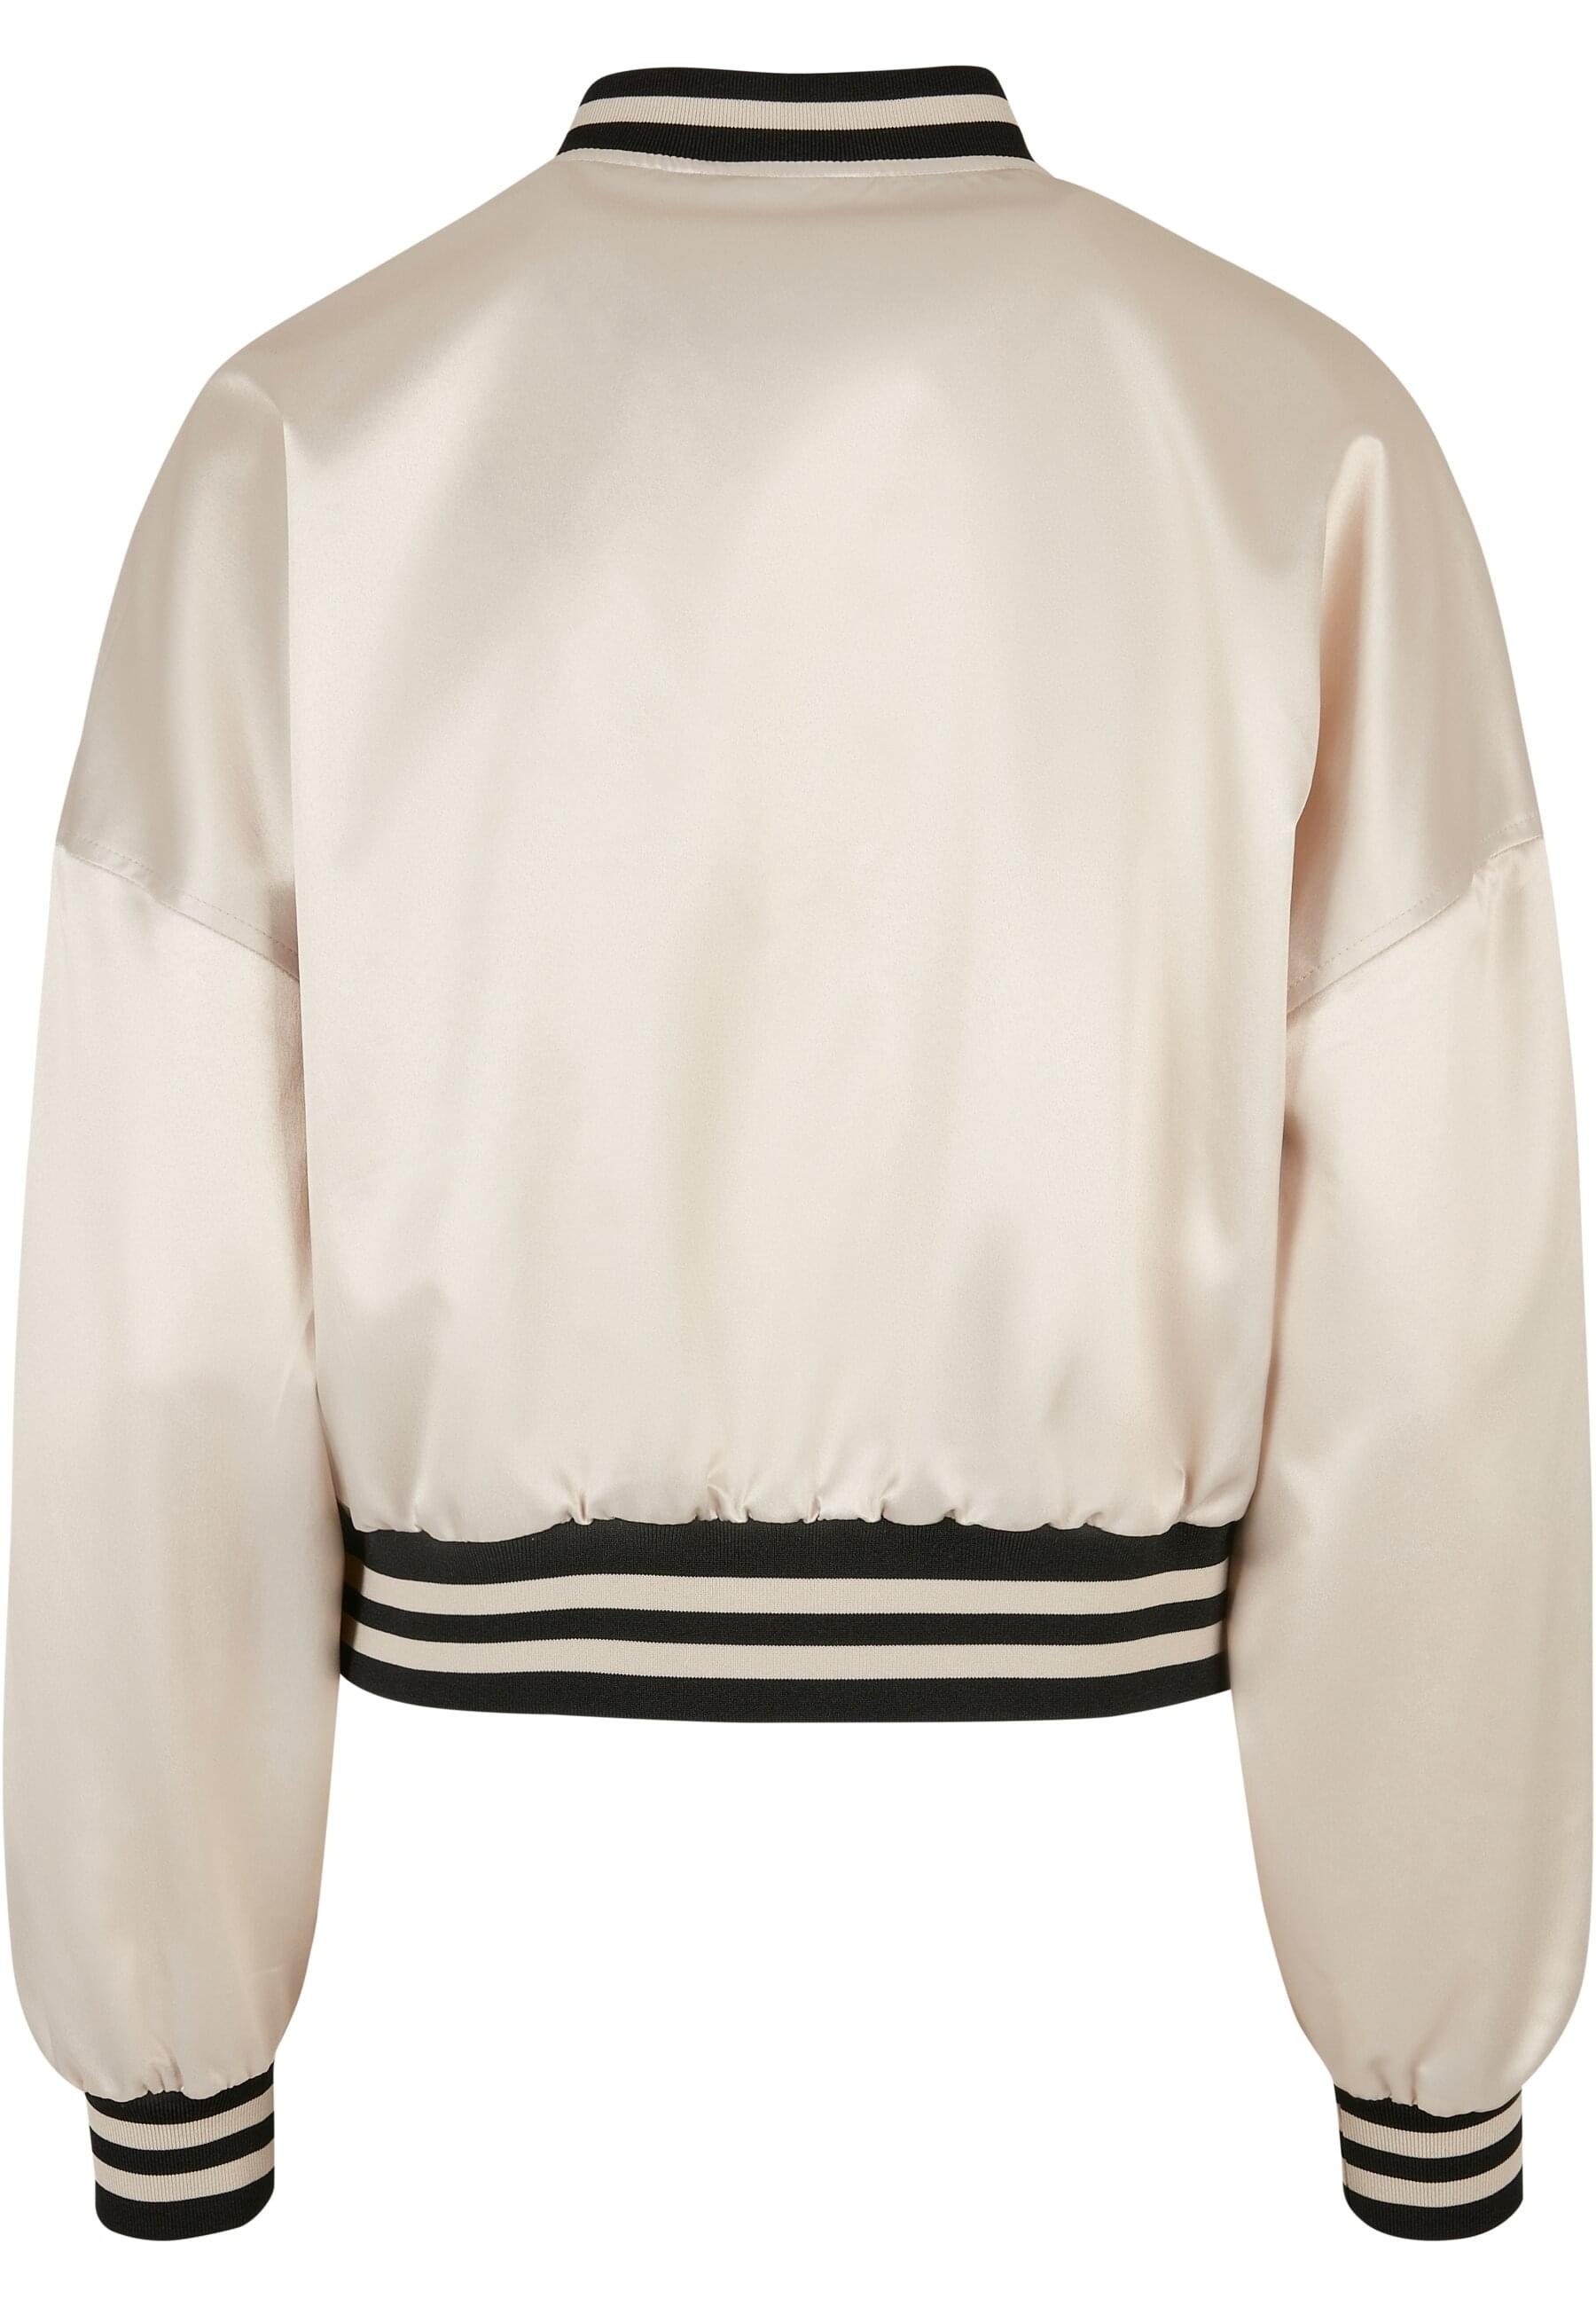 URBAN CLASSICS Collegejacke »Urban Classics Damen Ladies Short Oversized Satin College Jacket«, (1 St.), ohne Kapuze